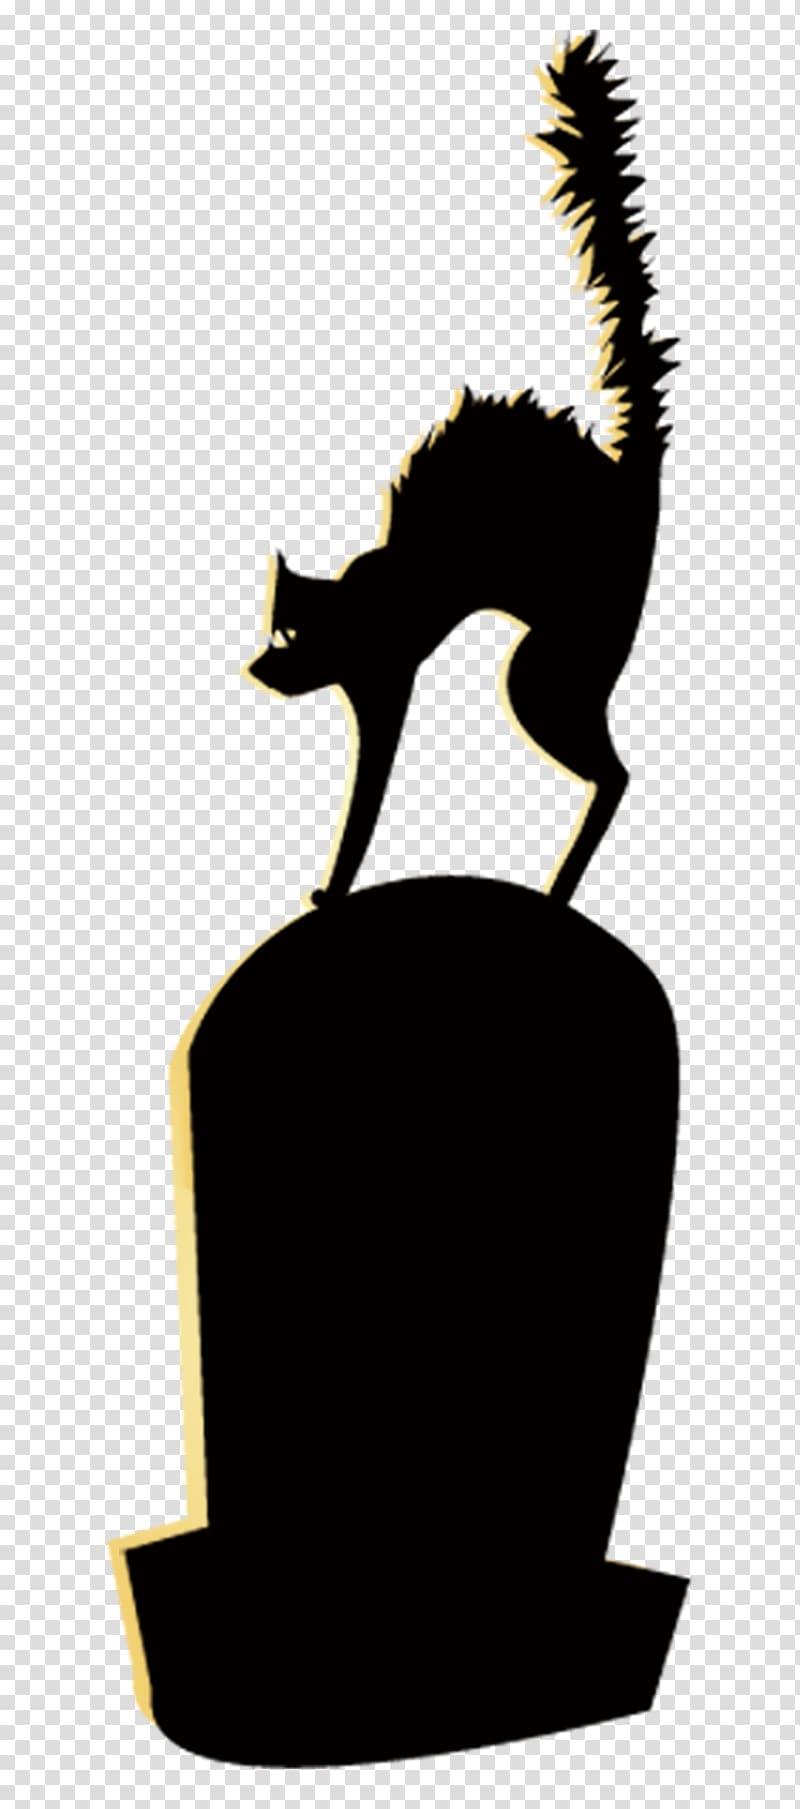 Electric shock black cat transparent background PNG clipart